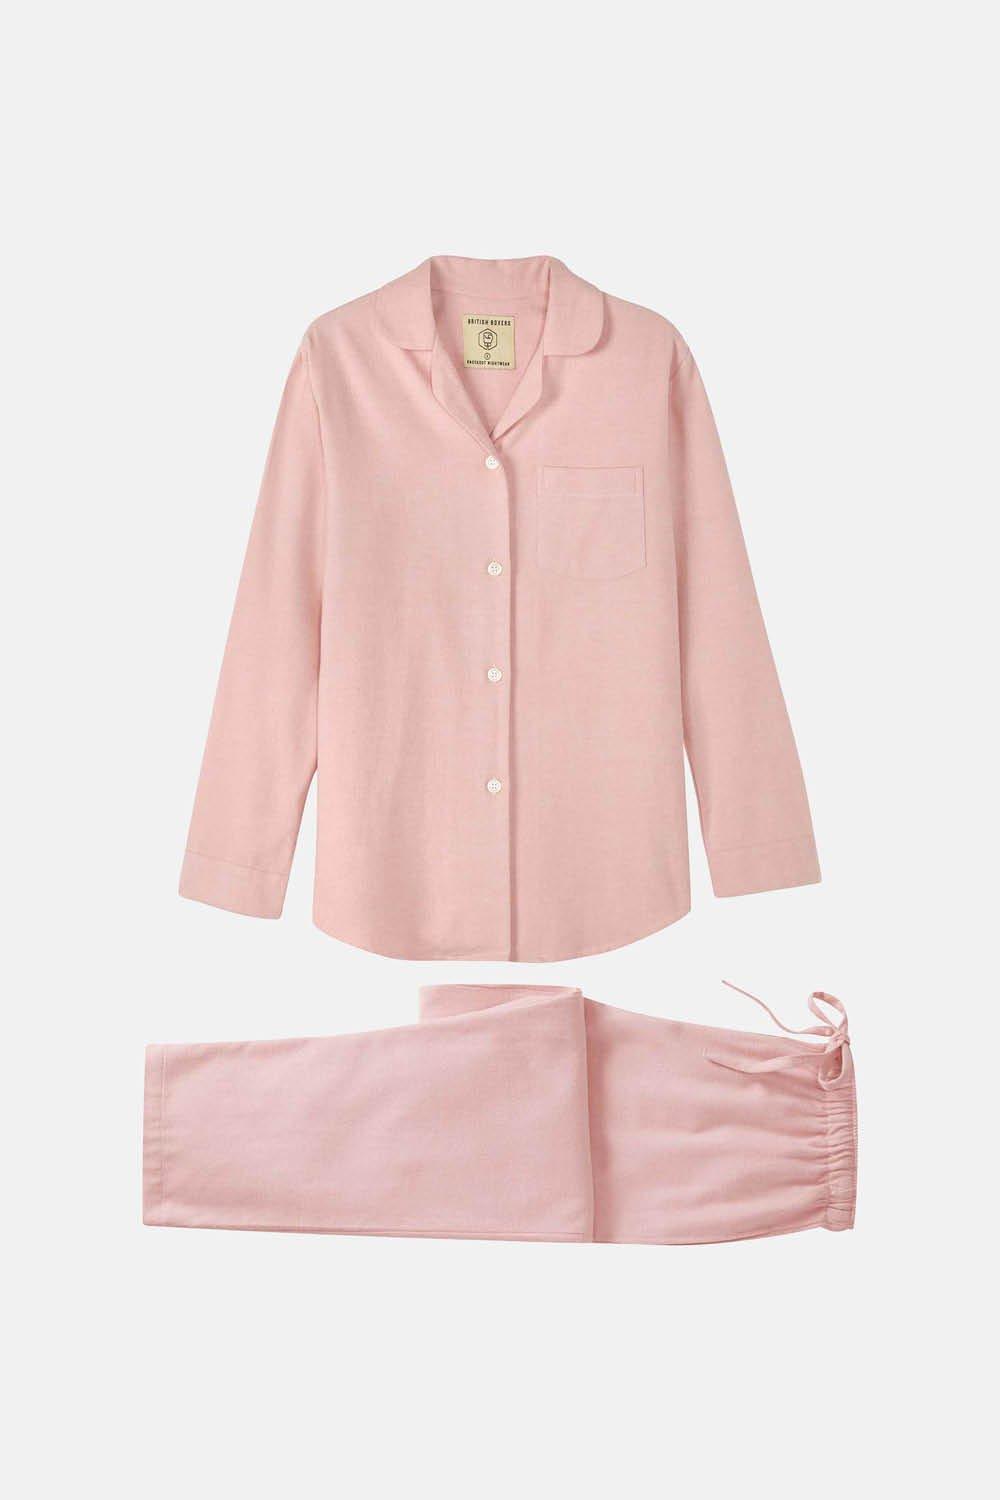 Powder Pink 'Herringbone' Brushed Cotton Pyjama Set